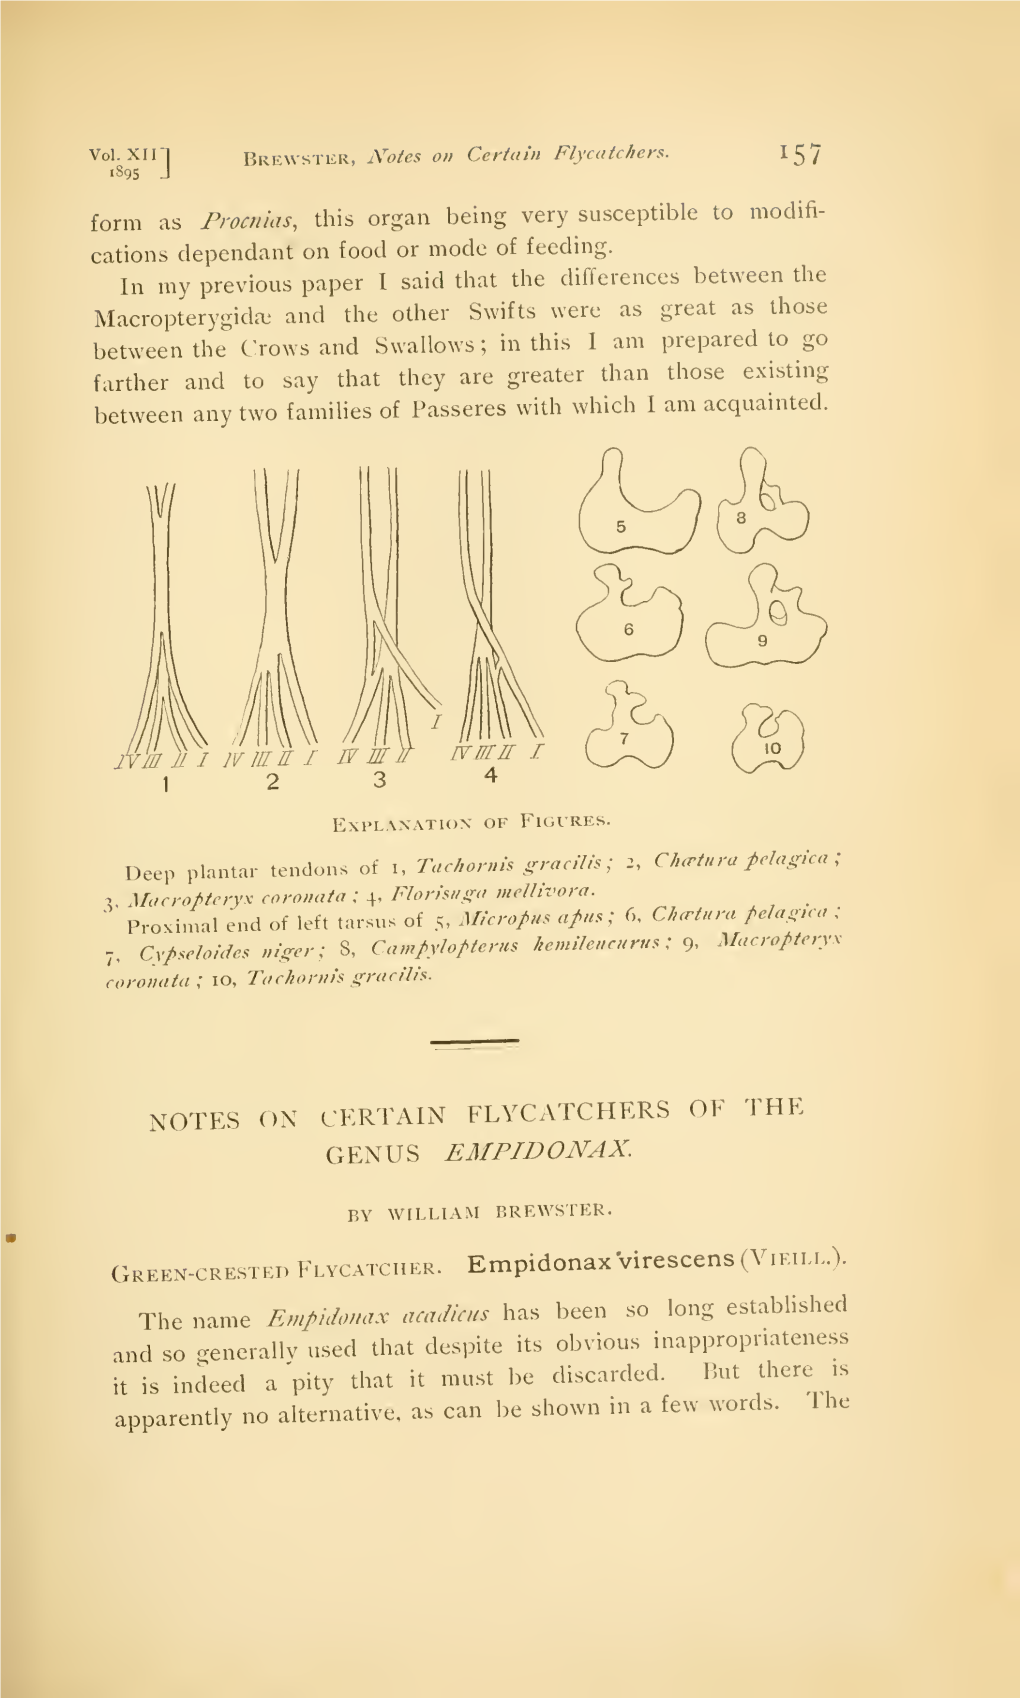 Notes on Certain Flycatchers of the Genus Empidonax